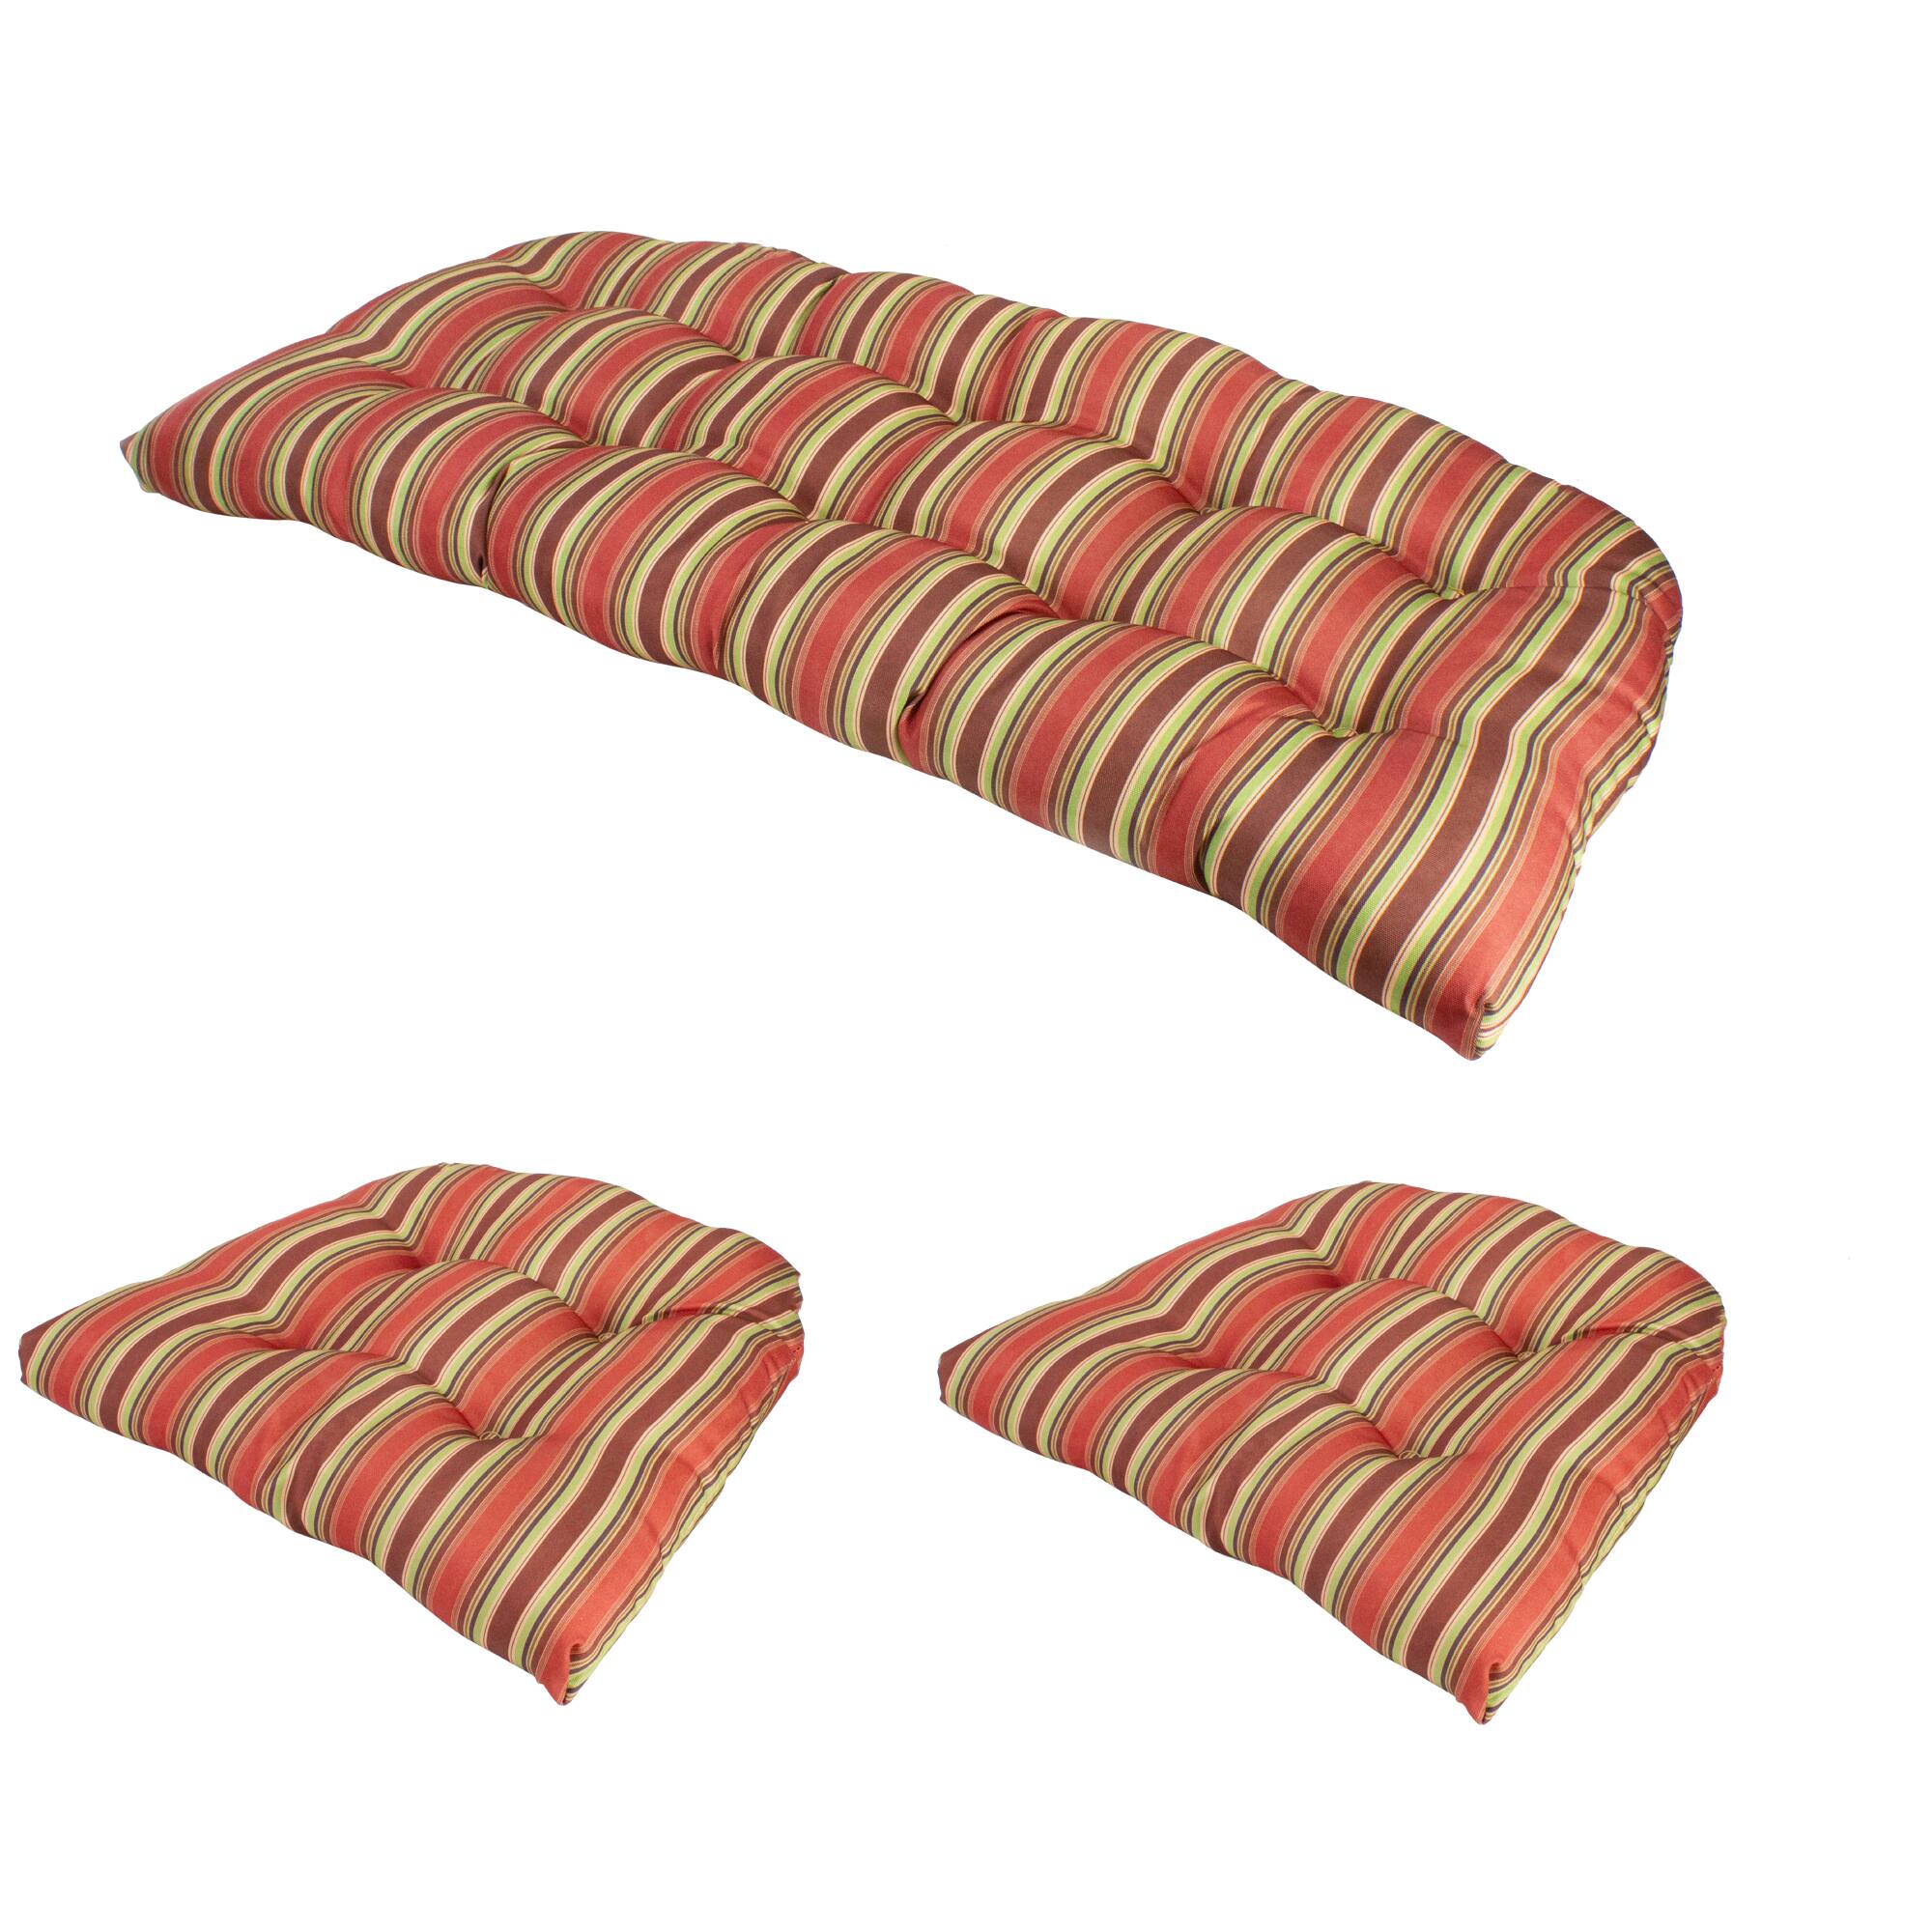 3 Piece Wicker Furniture Cushion Set